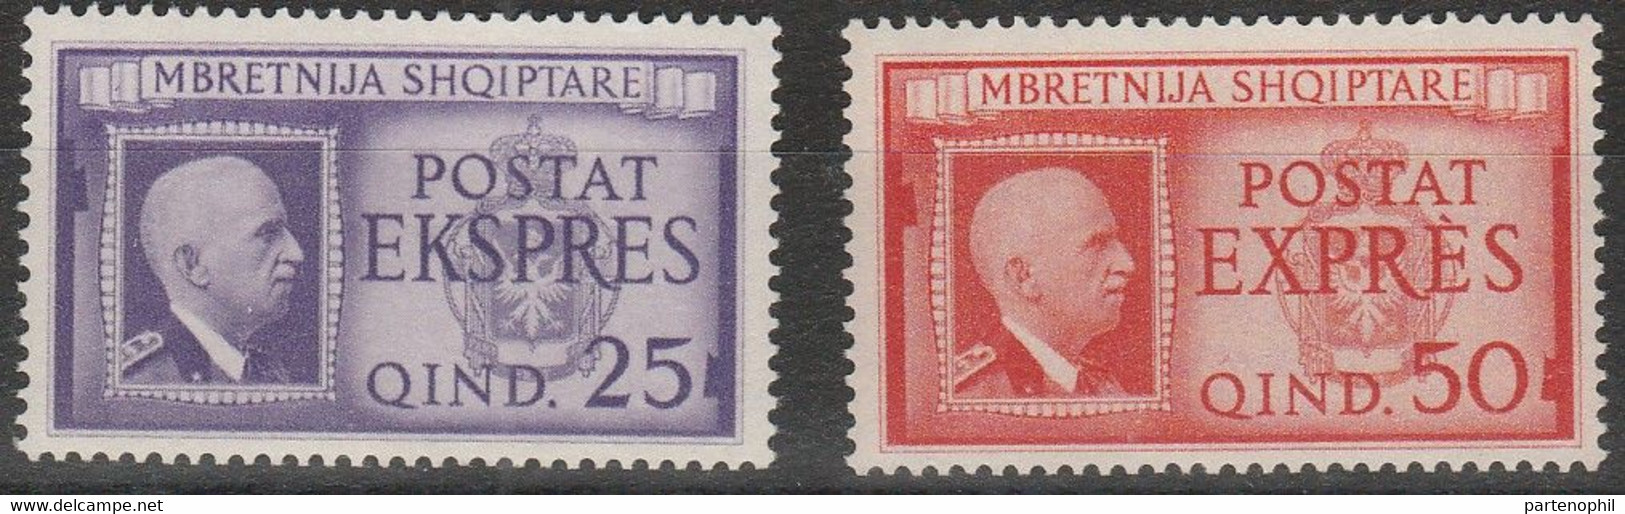 281 Occupazione Italiana Albania  Espressi - 1940 - Vittorio Emanuele II N. 1/2. Cat. € 110,00. SPL MNH - Albanie